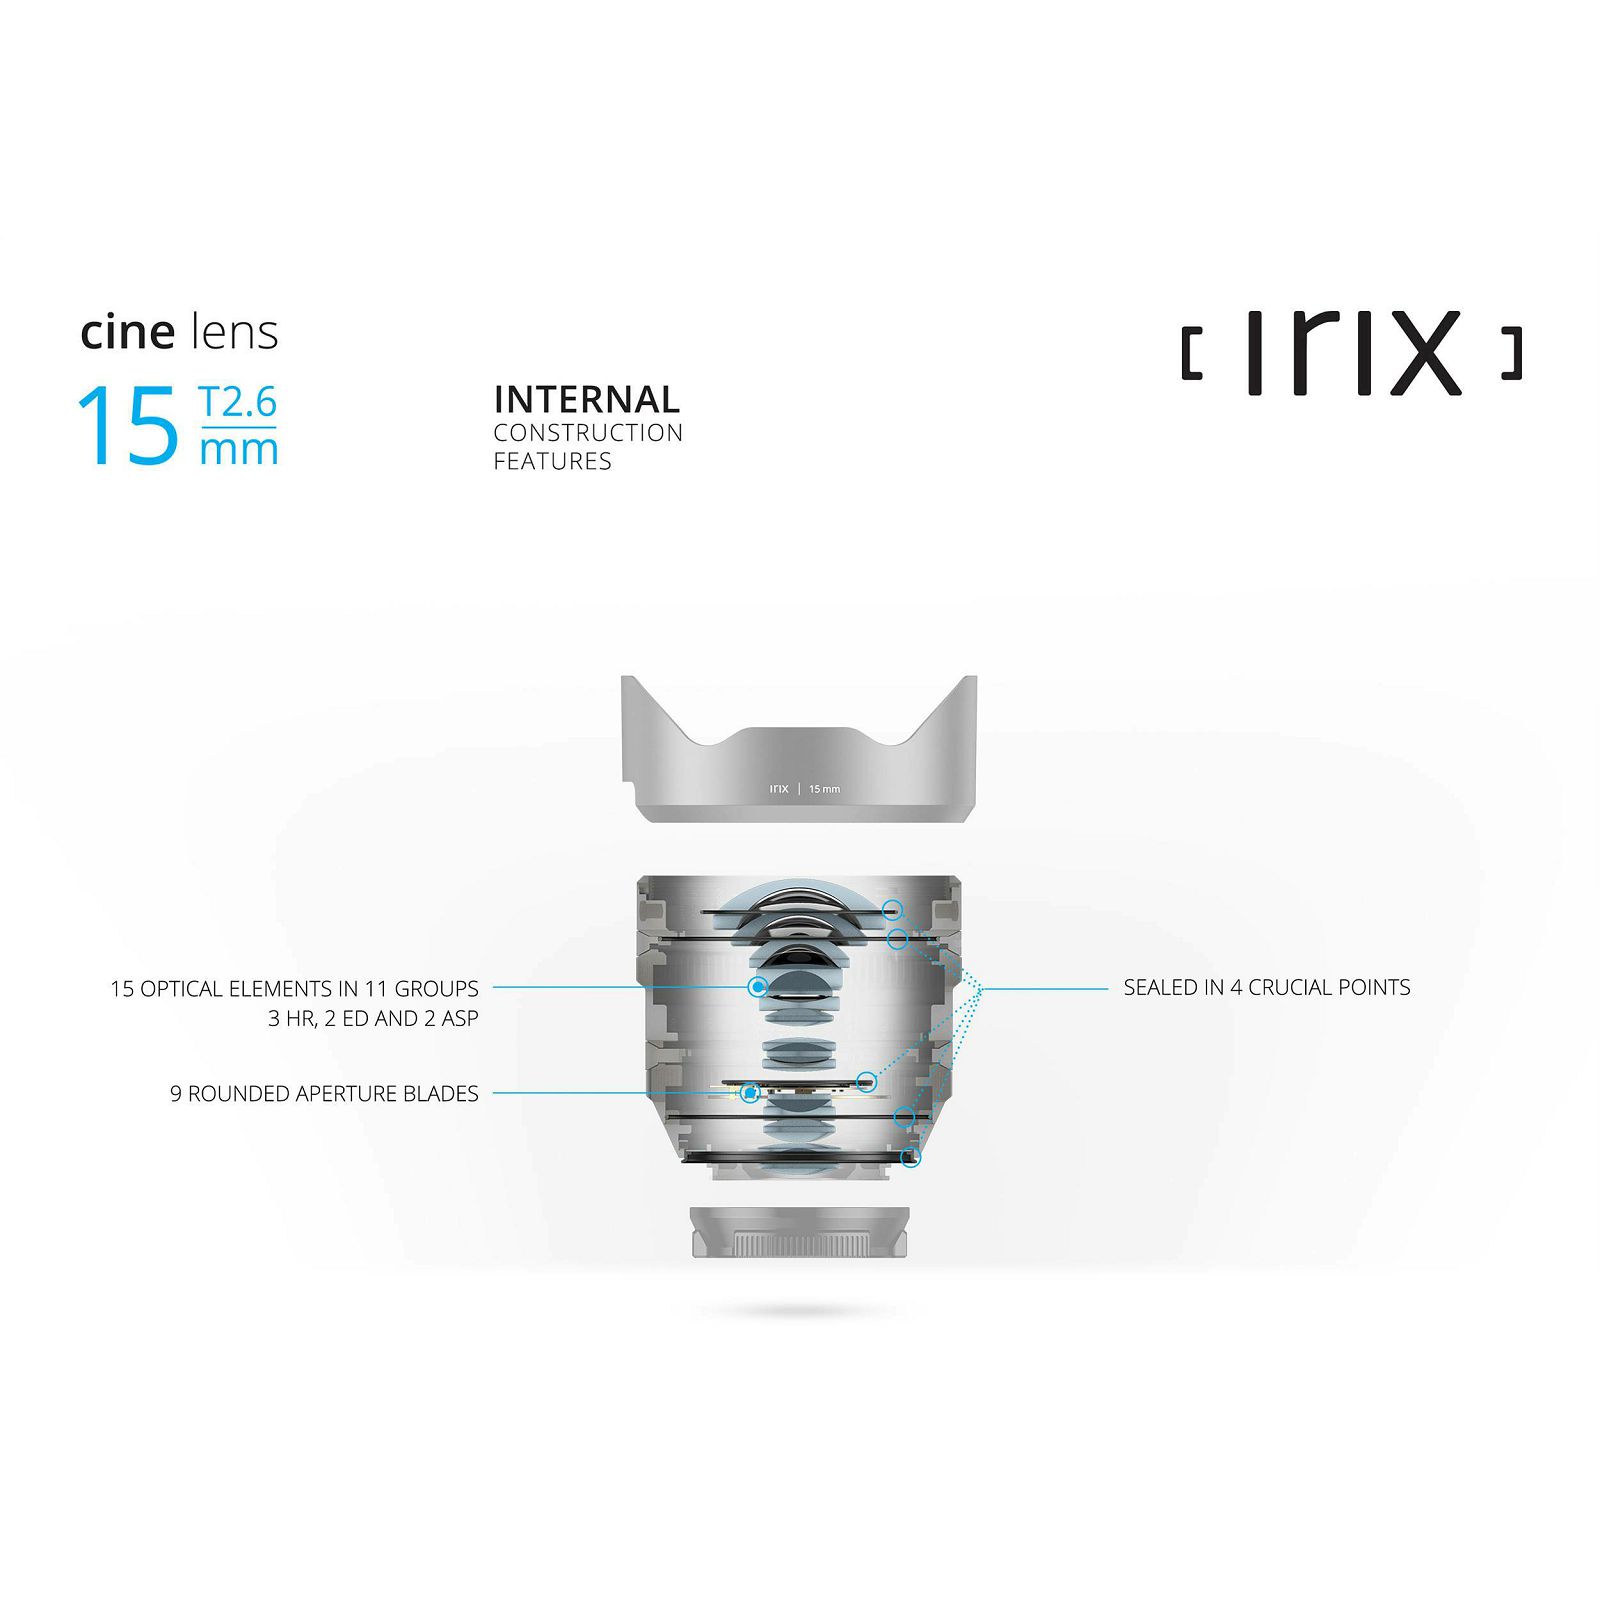 Irix Cine 15mm T2.6 Imperial širokokutni objektiv za PL-mount